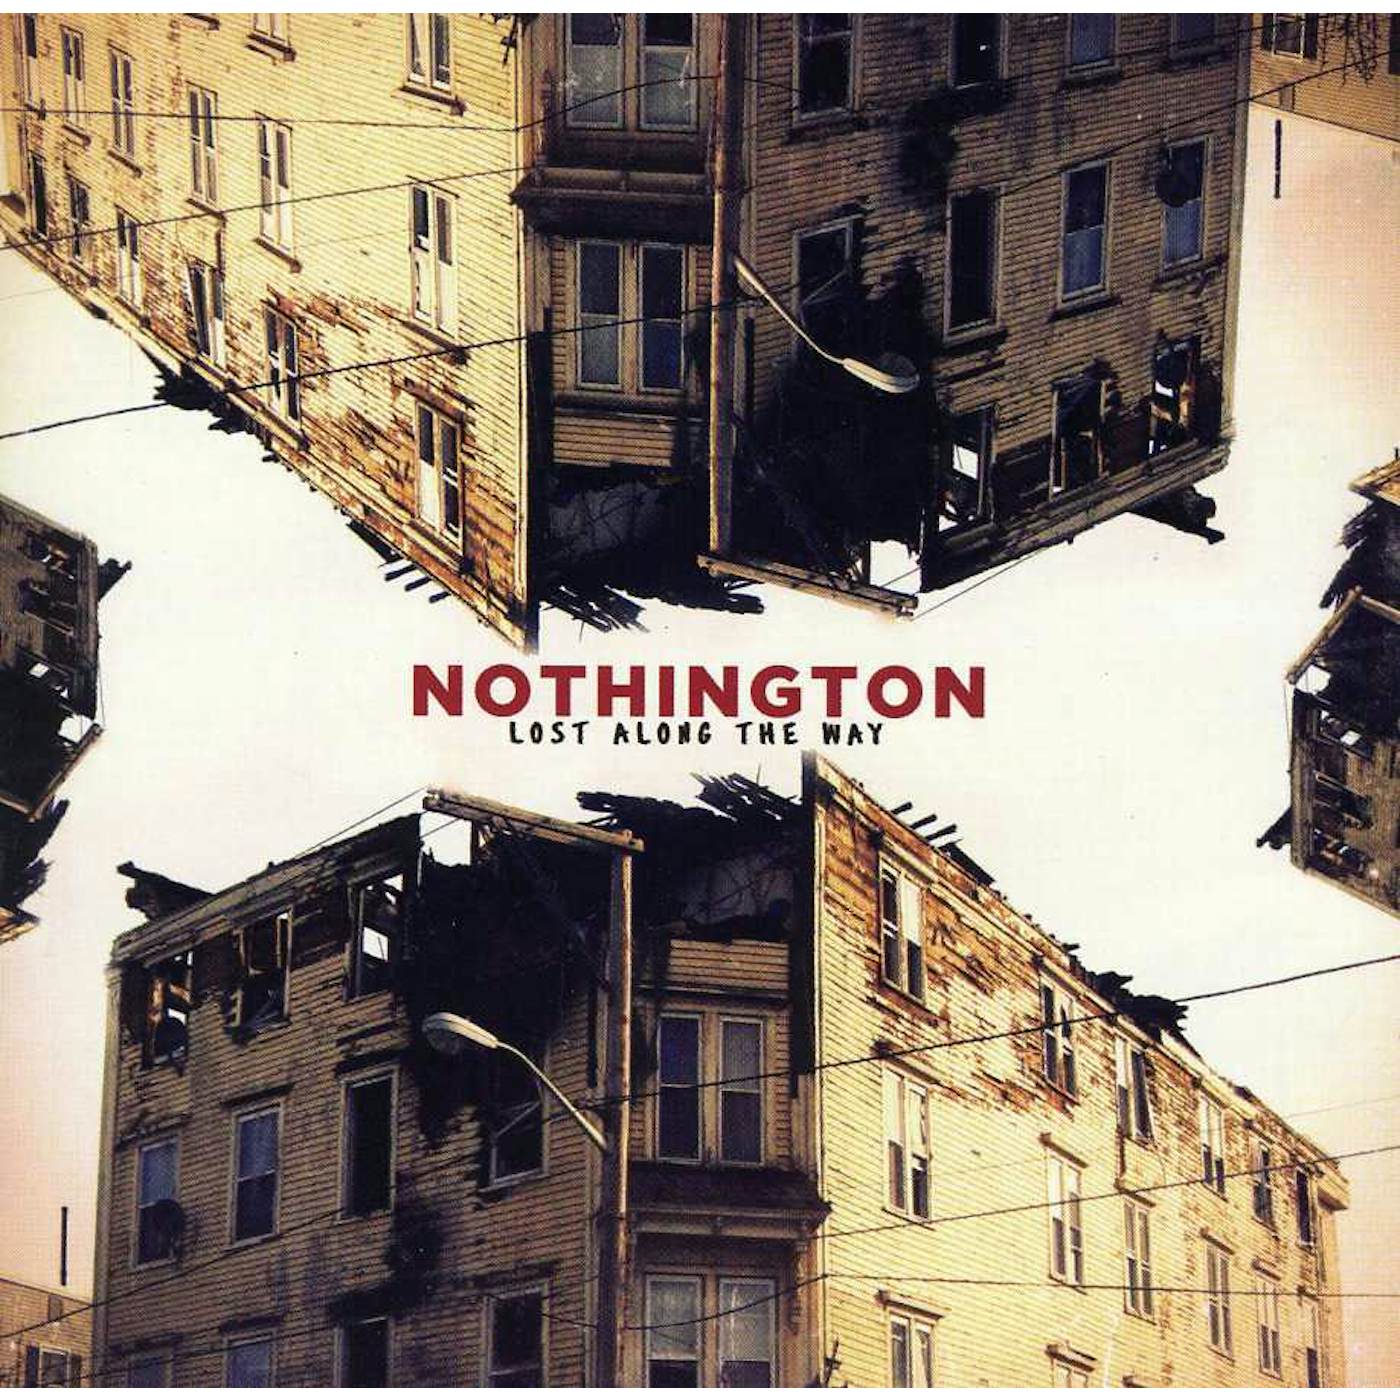 Nothington LOST ALONG THE WAY CD